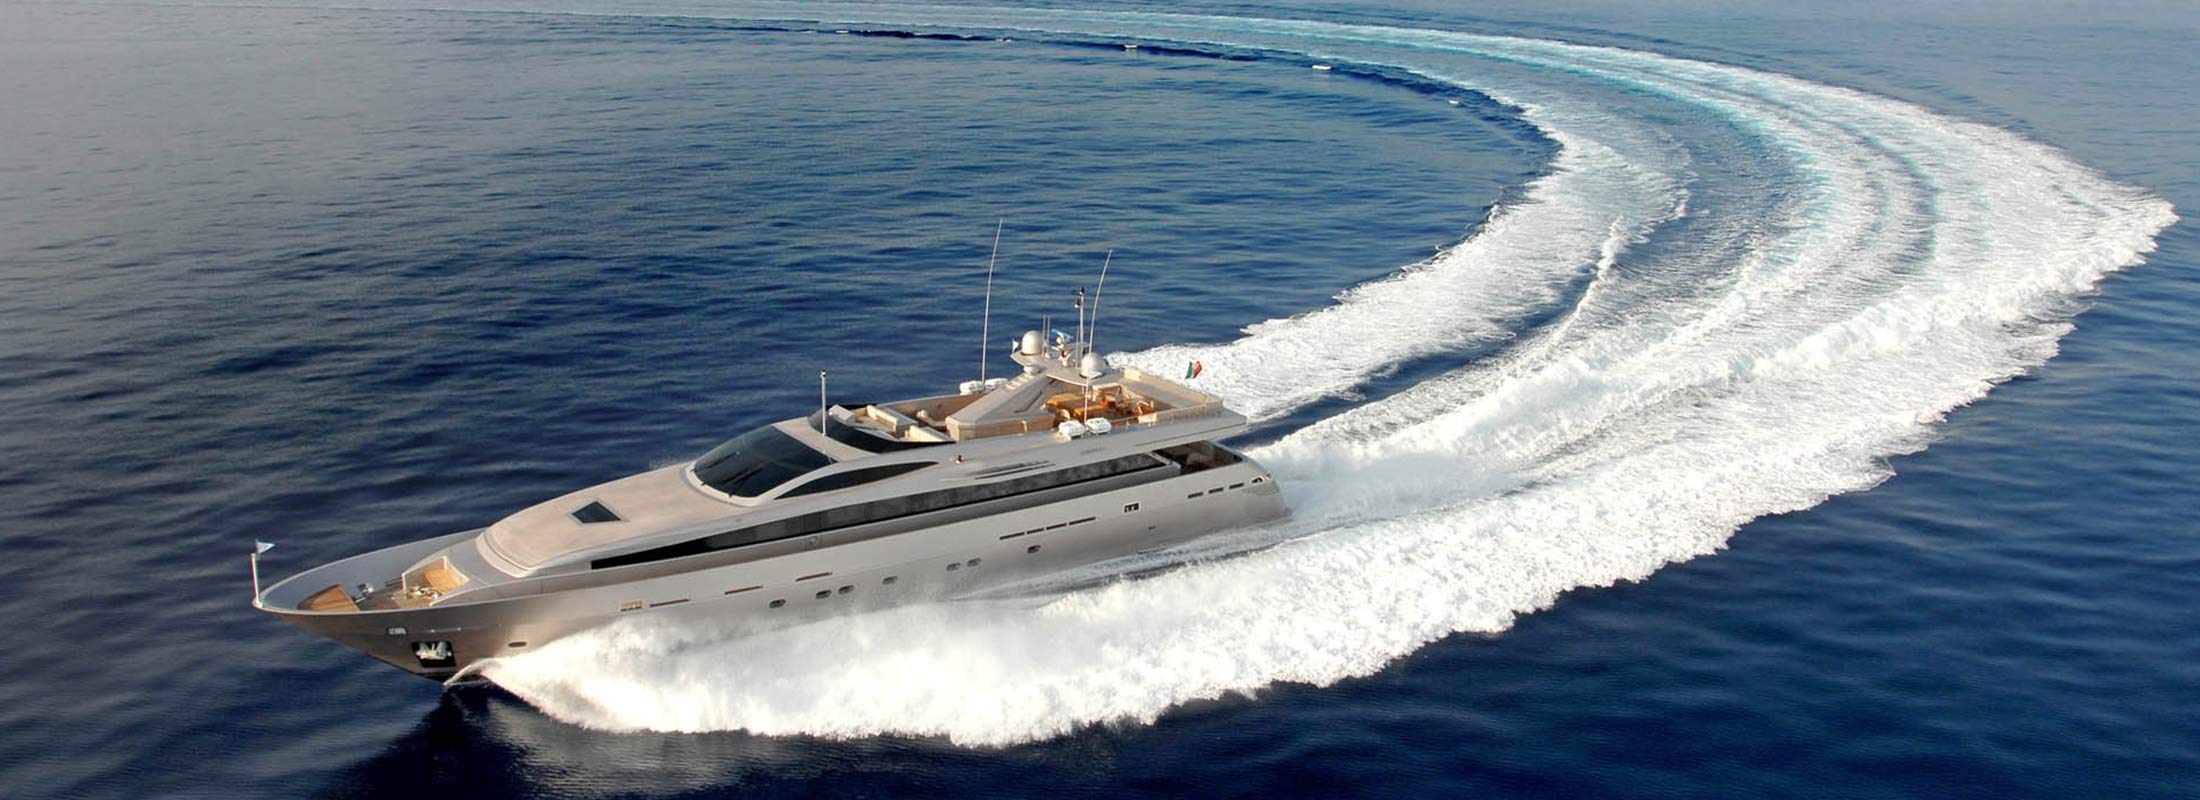 Aqua Motor Yacht for Charter Mediterranean slider 2